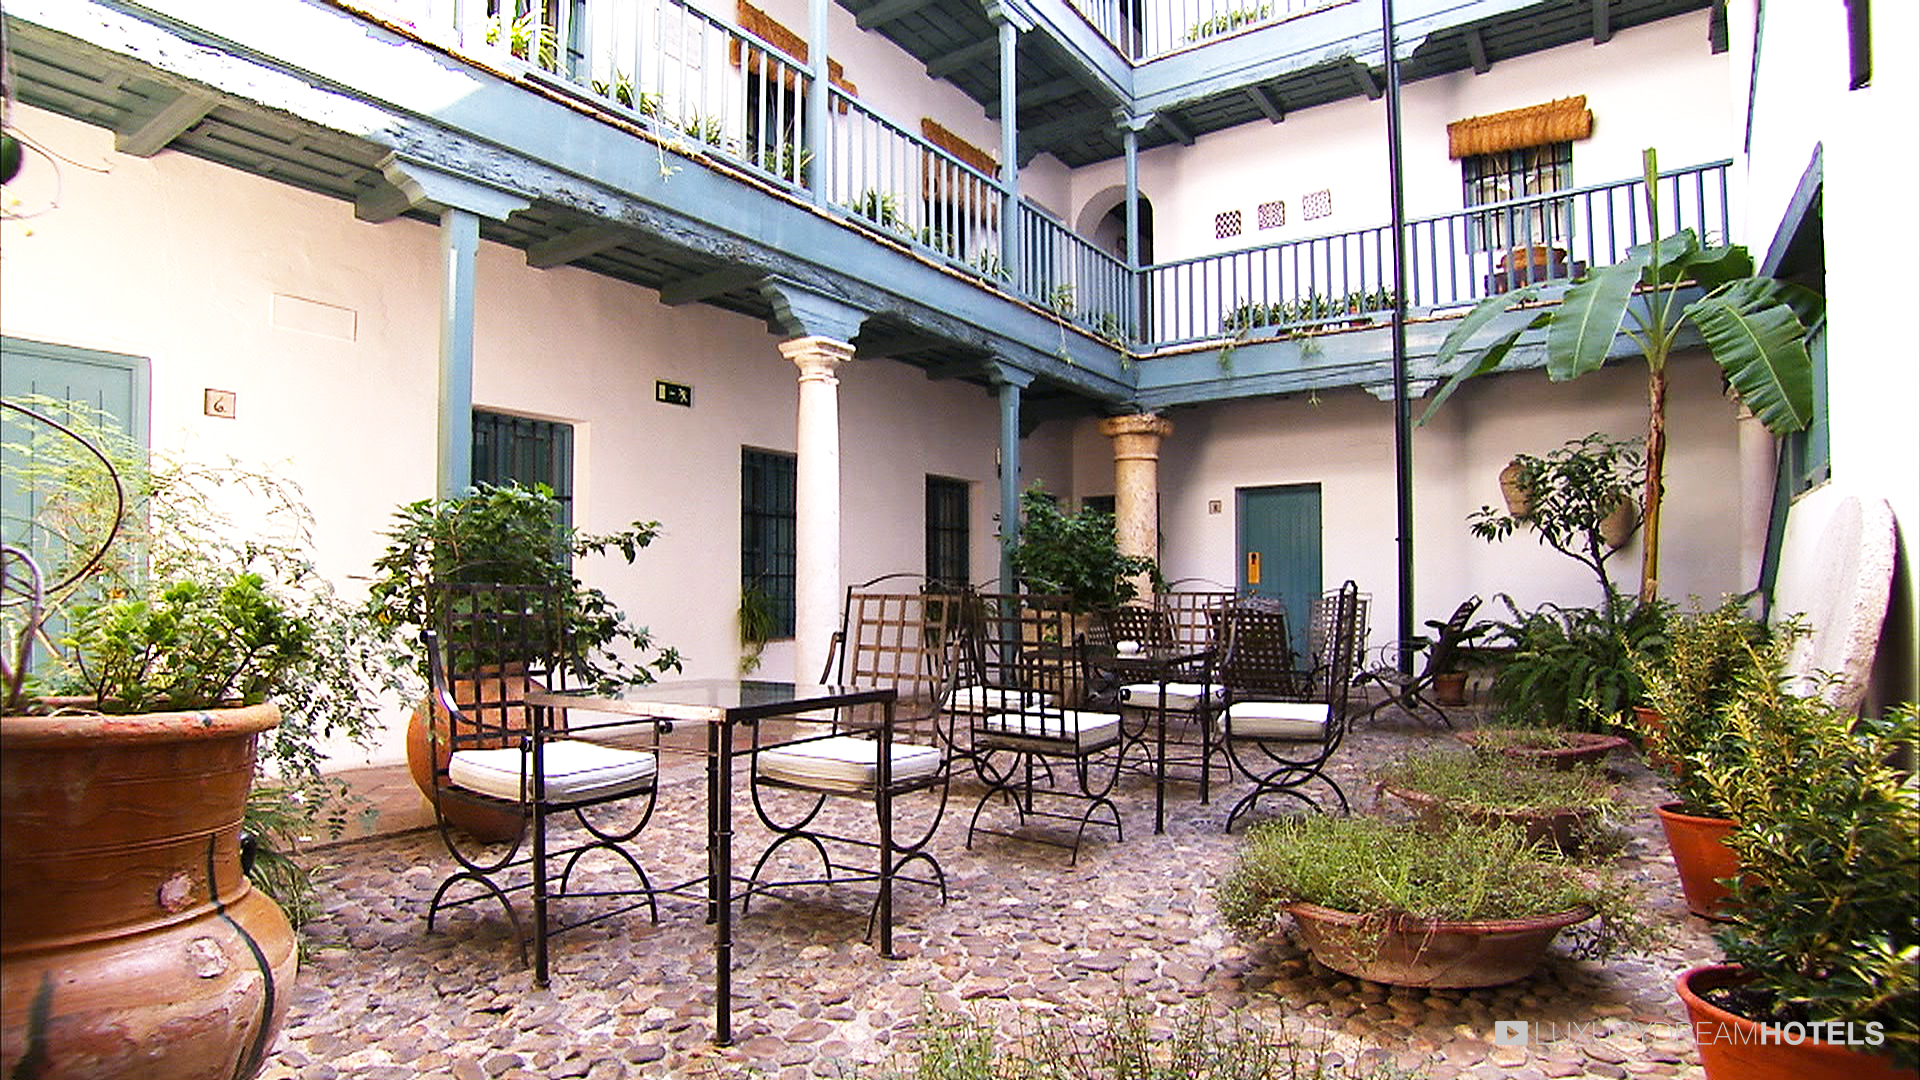 Luxury Hospes Las Casas del Rey de Baeza, Seville, Spain - Luxury Dream Hotels